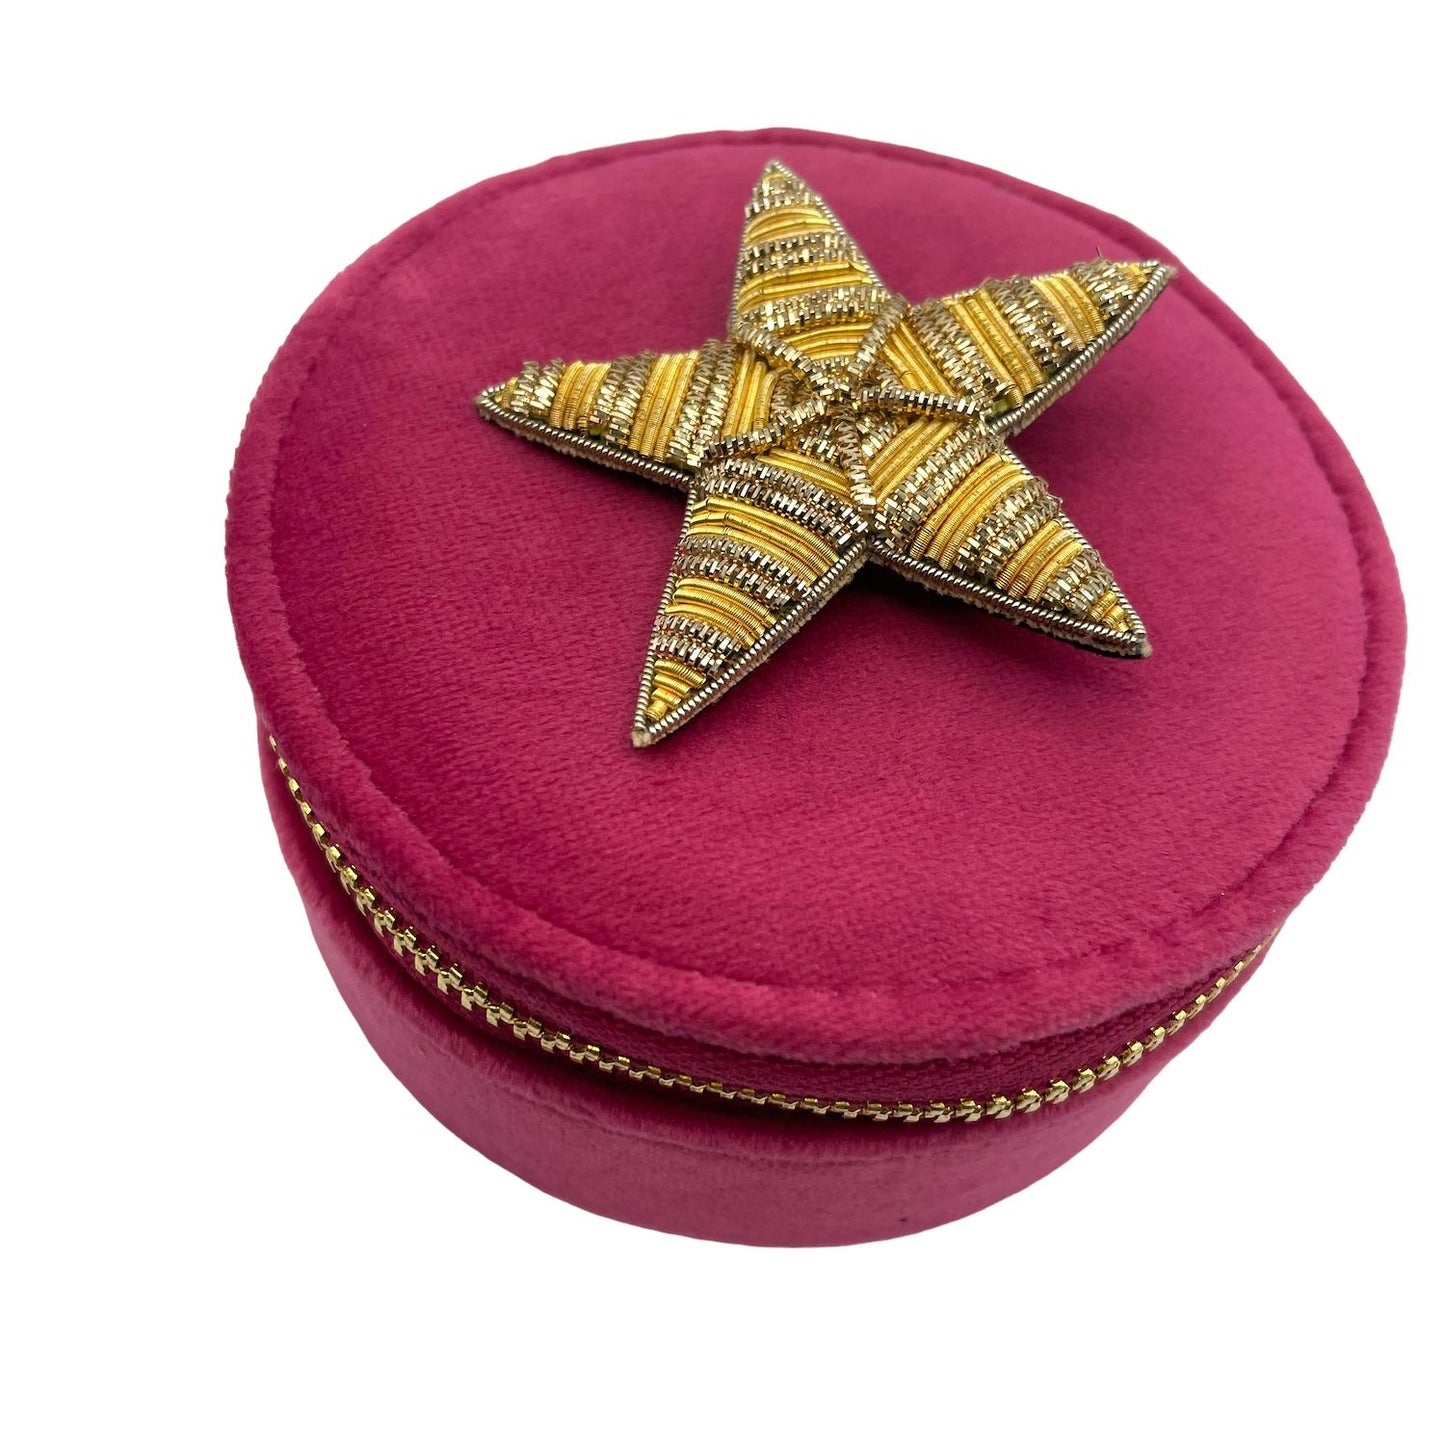 Jewellery travel pot bright pink - recycled velvet - gold star